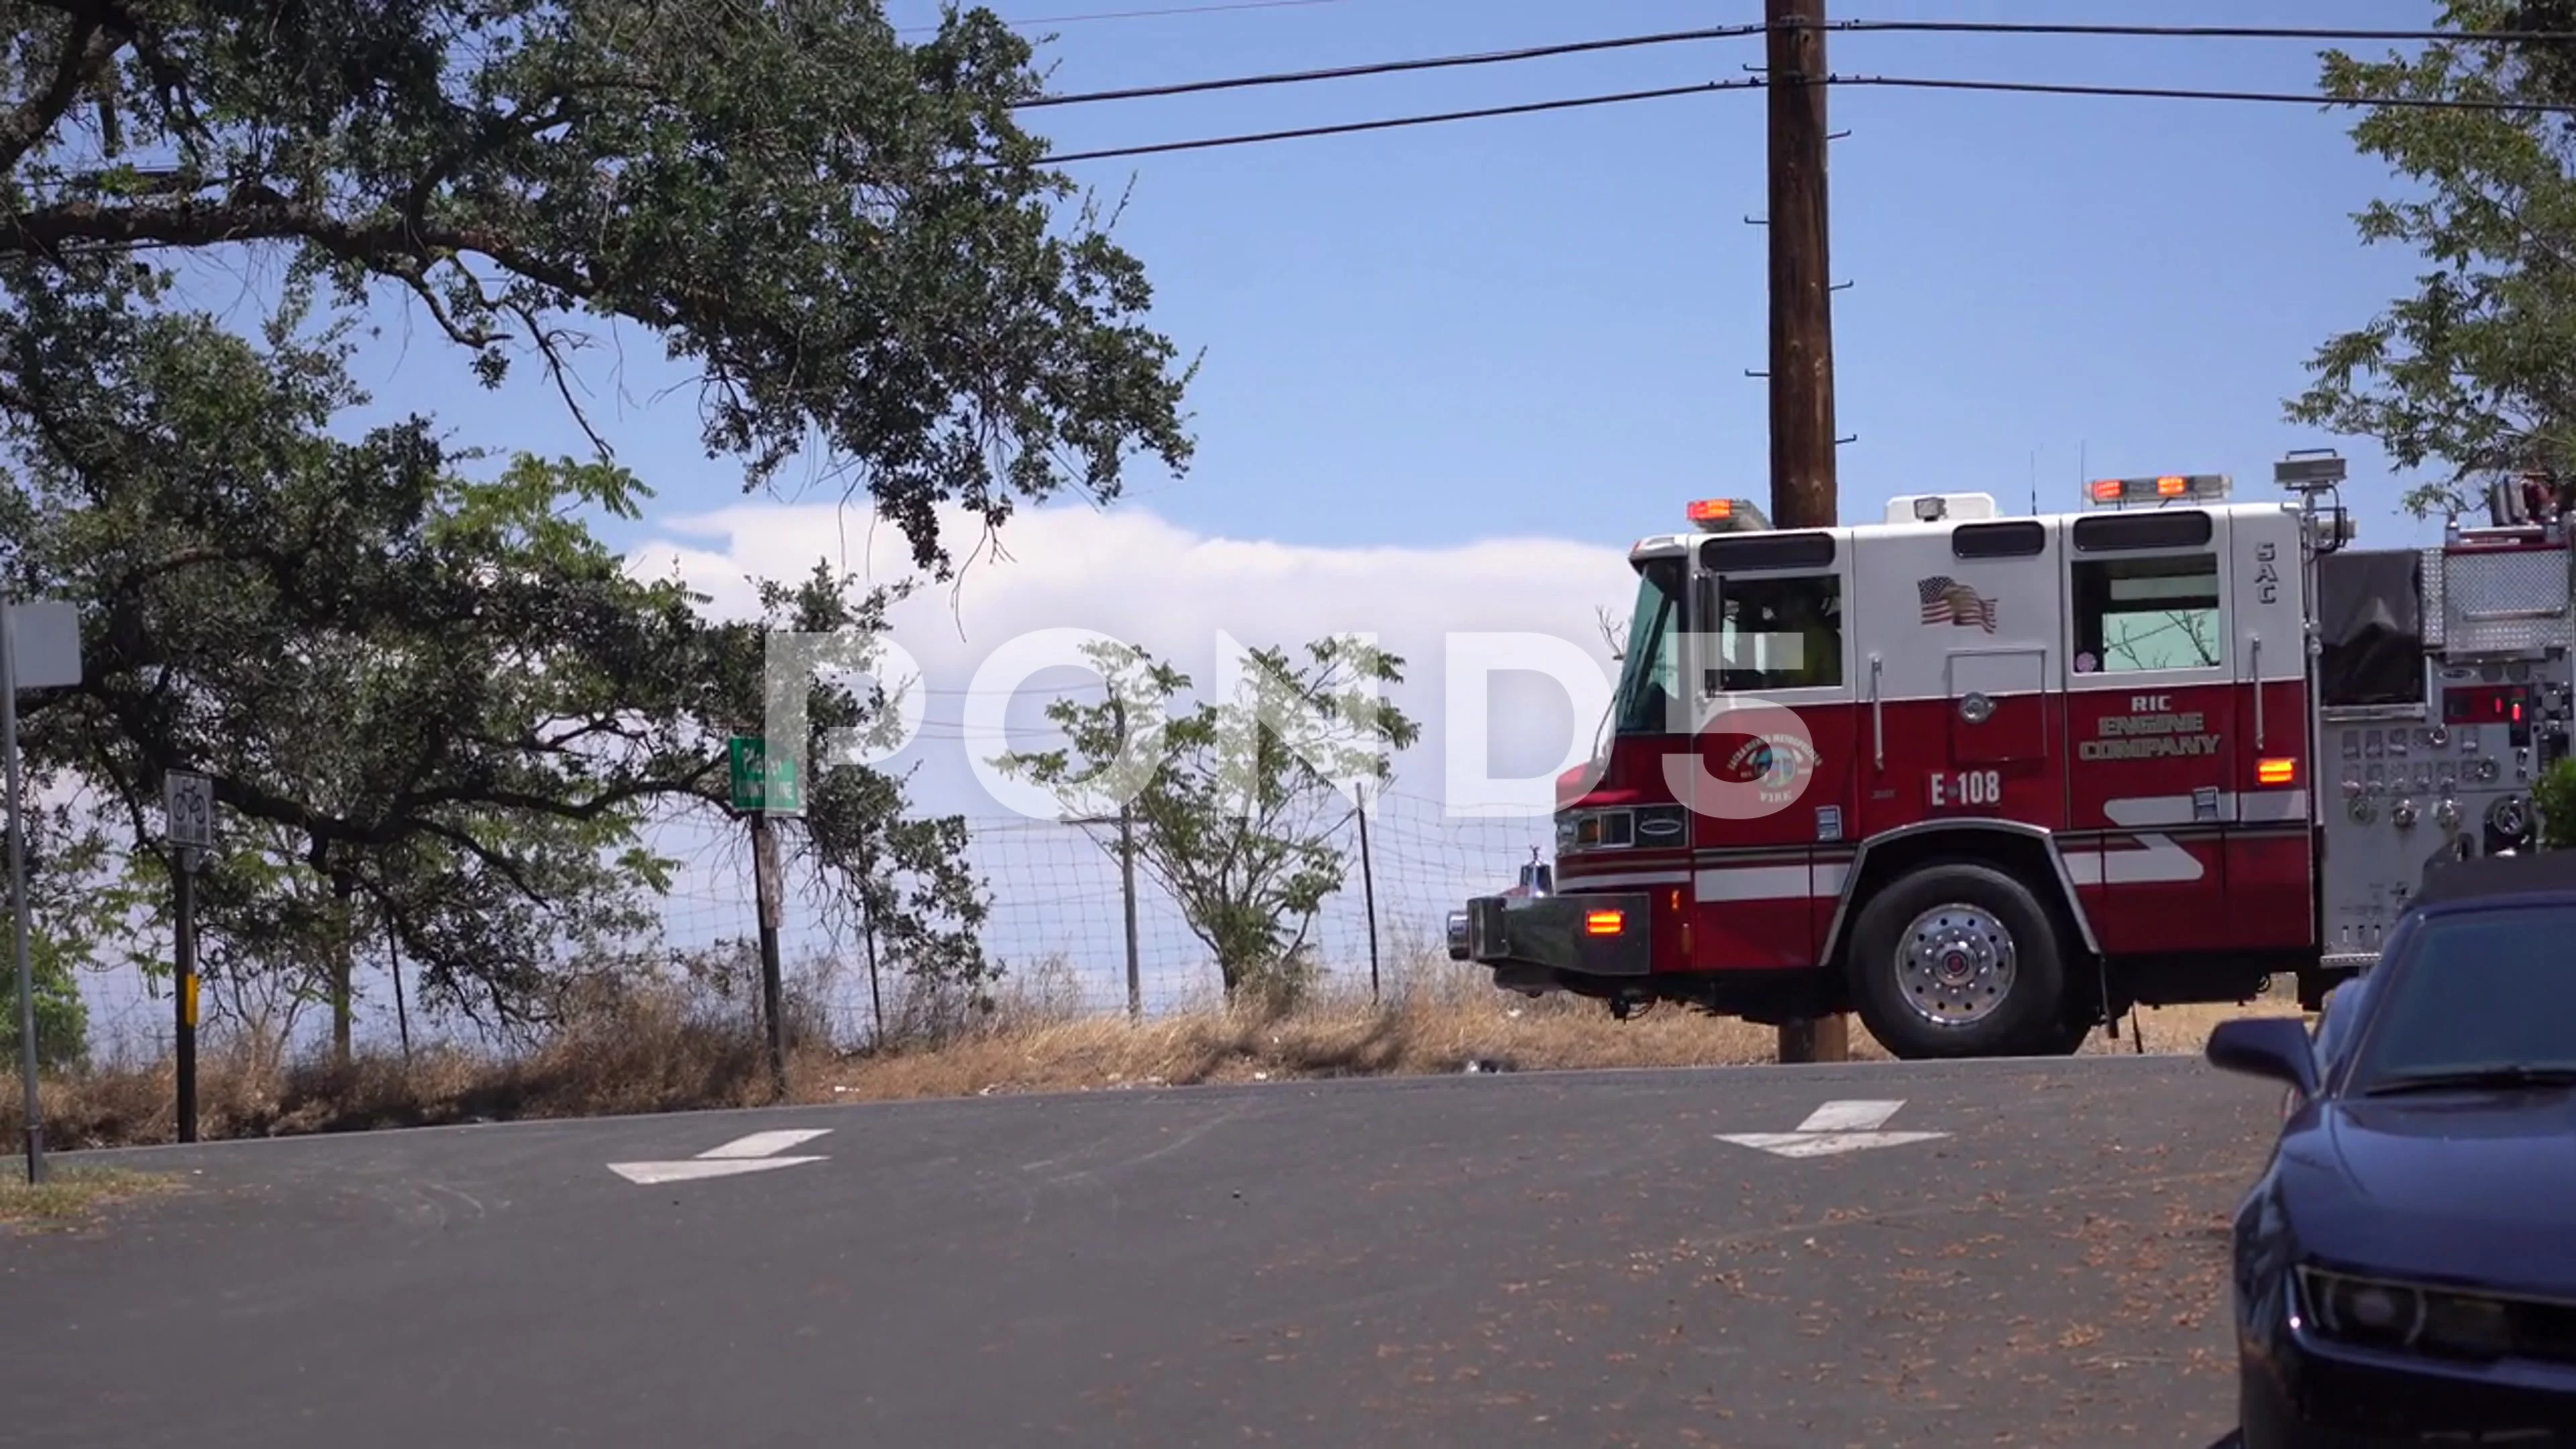 fire trucks responding to calls